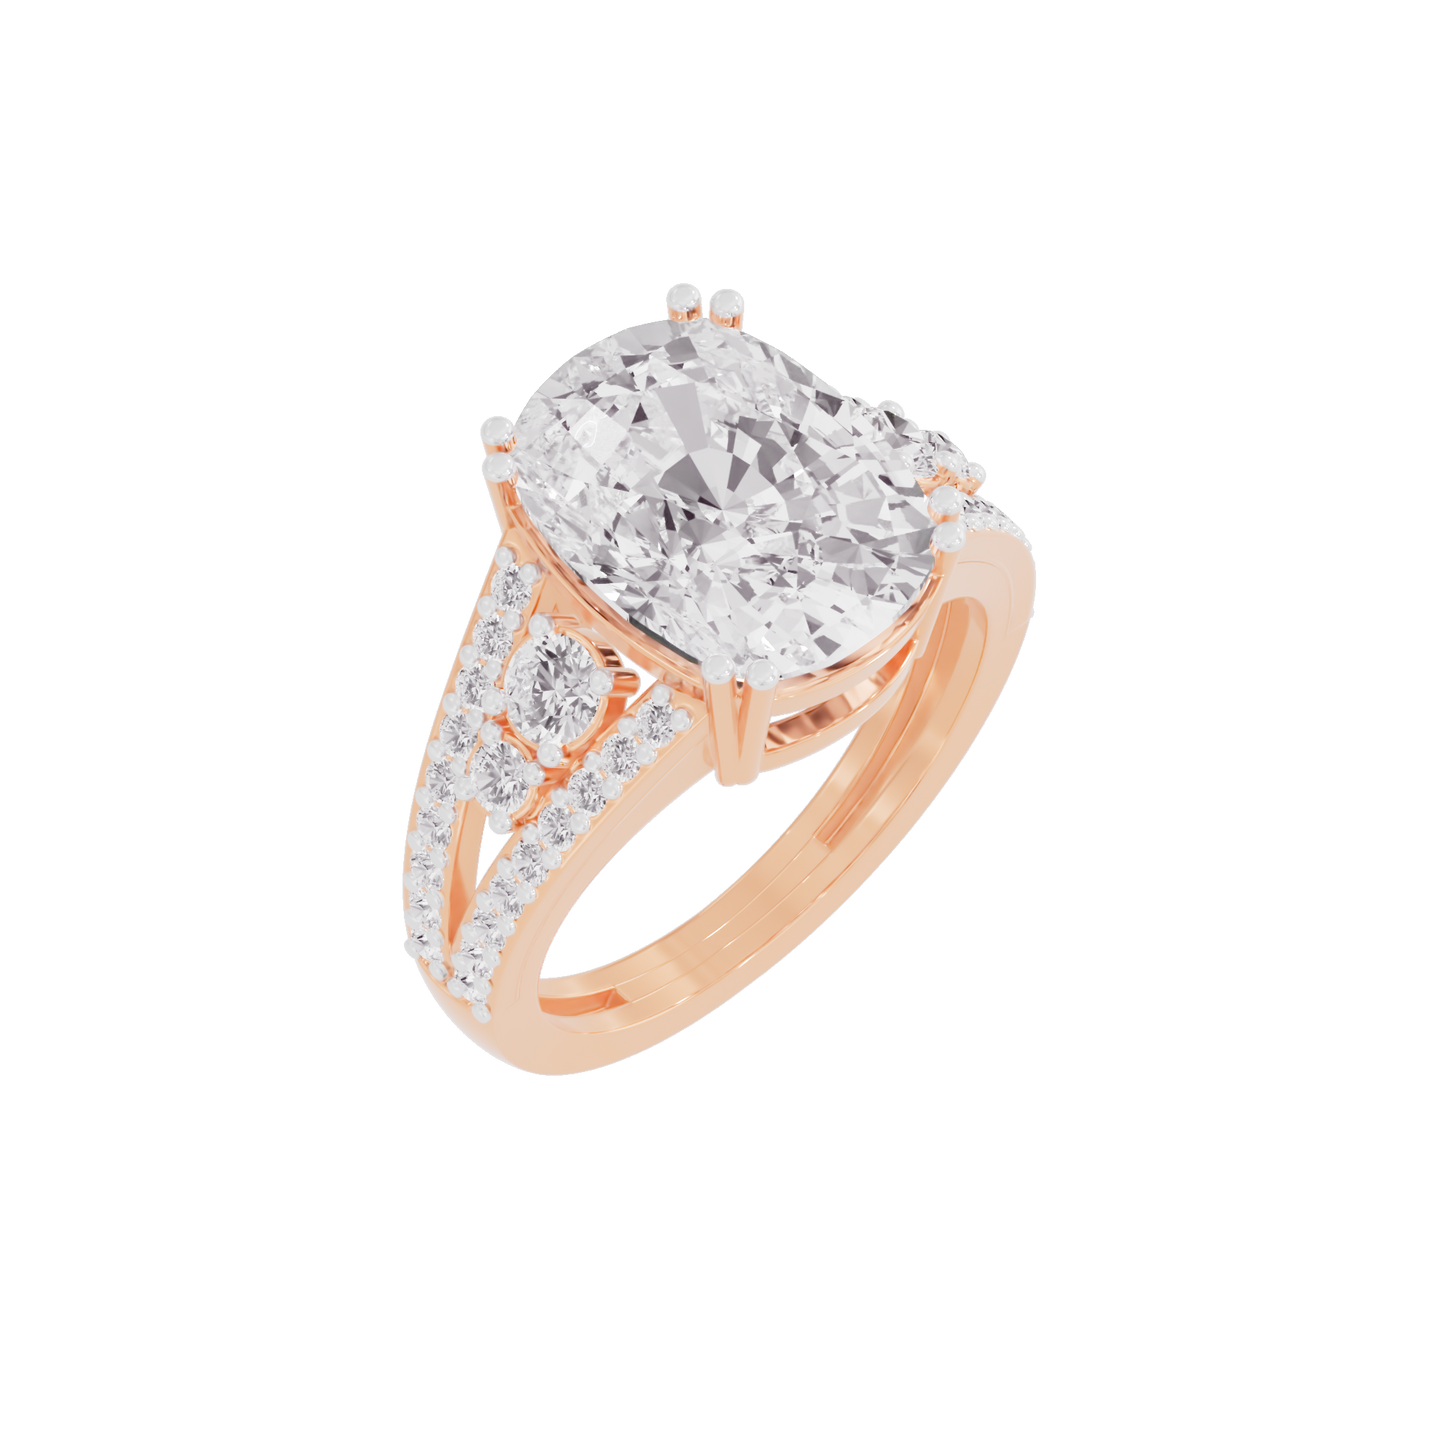 Captivating Gleam Diamond Ring